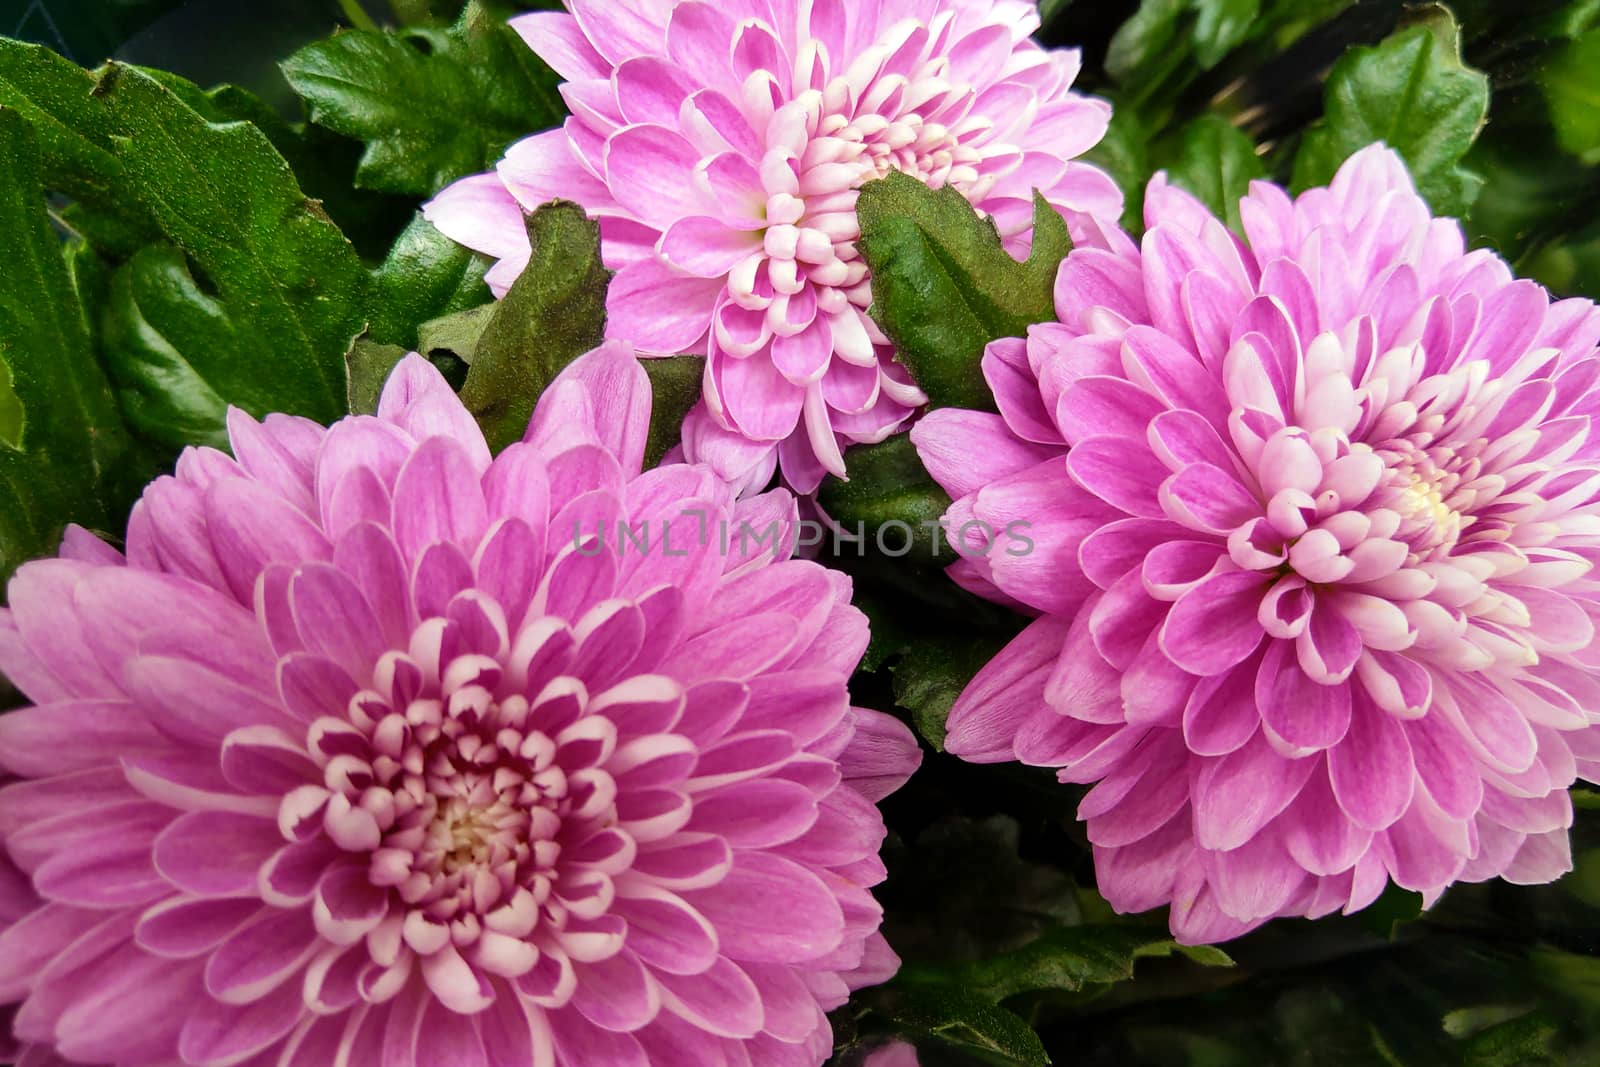 Pink and purple Chrysanthemums. Chrysanthemum wallpaper. Floral background. Selective focus. by kip02kas